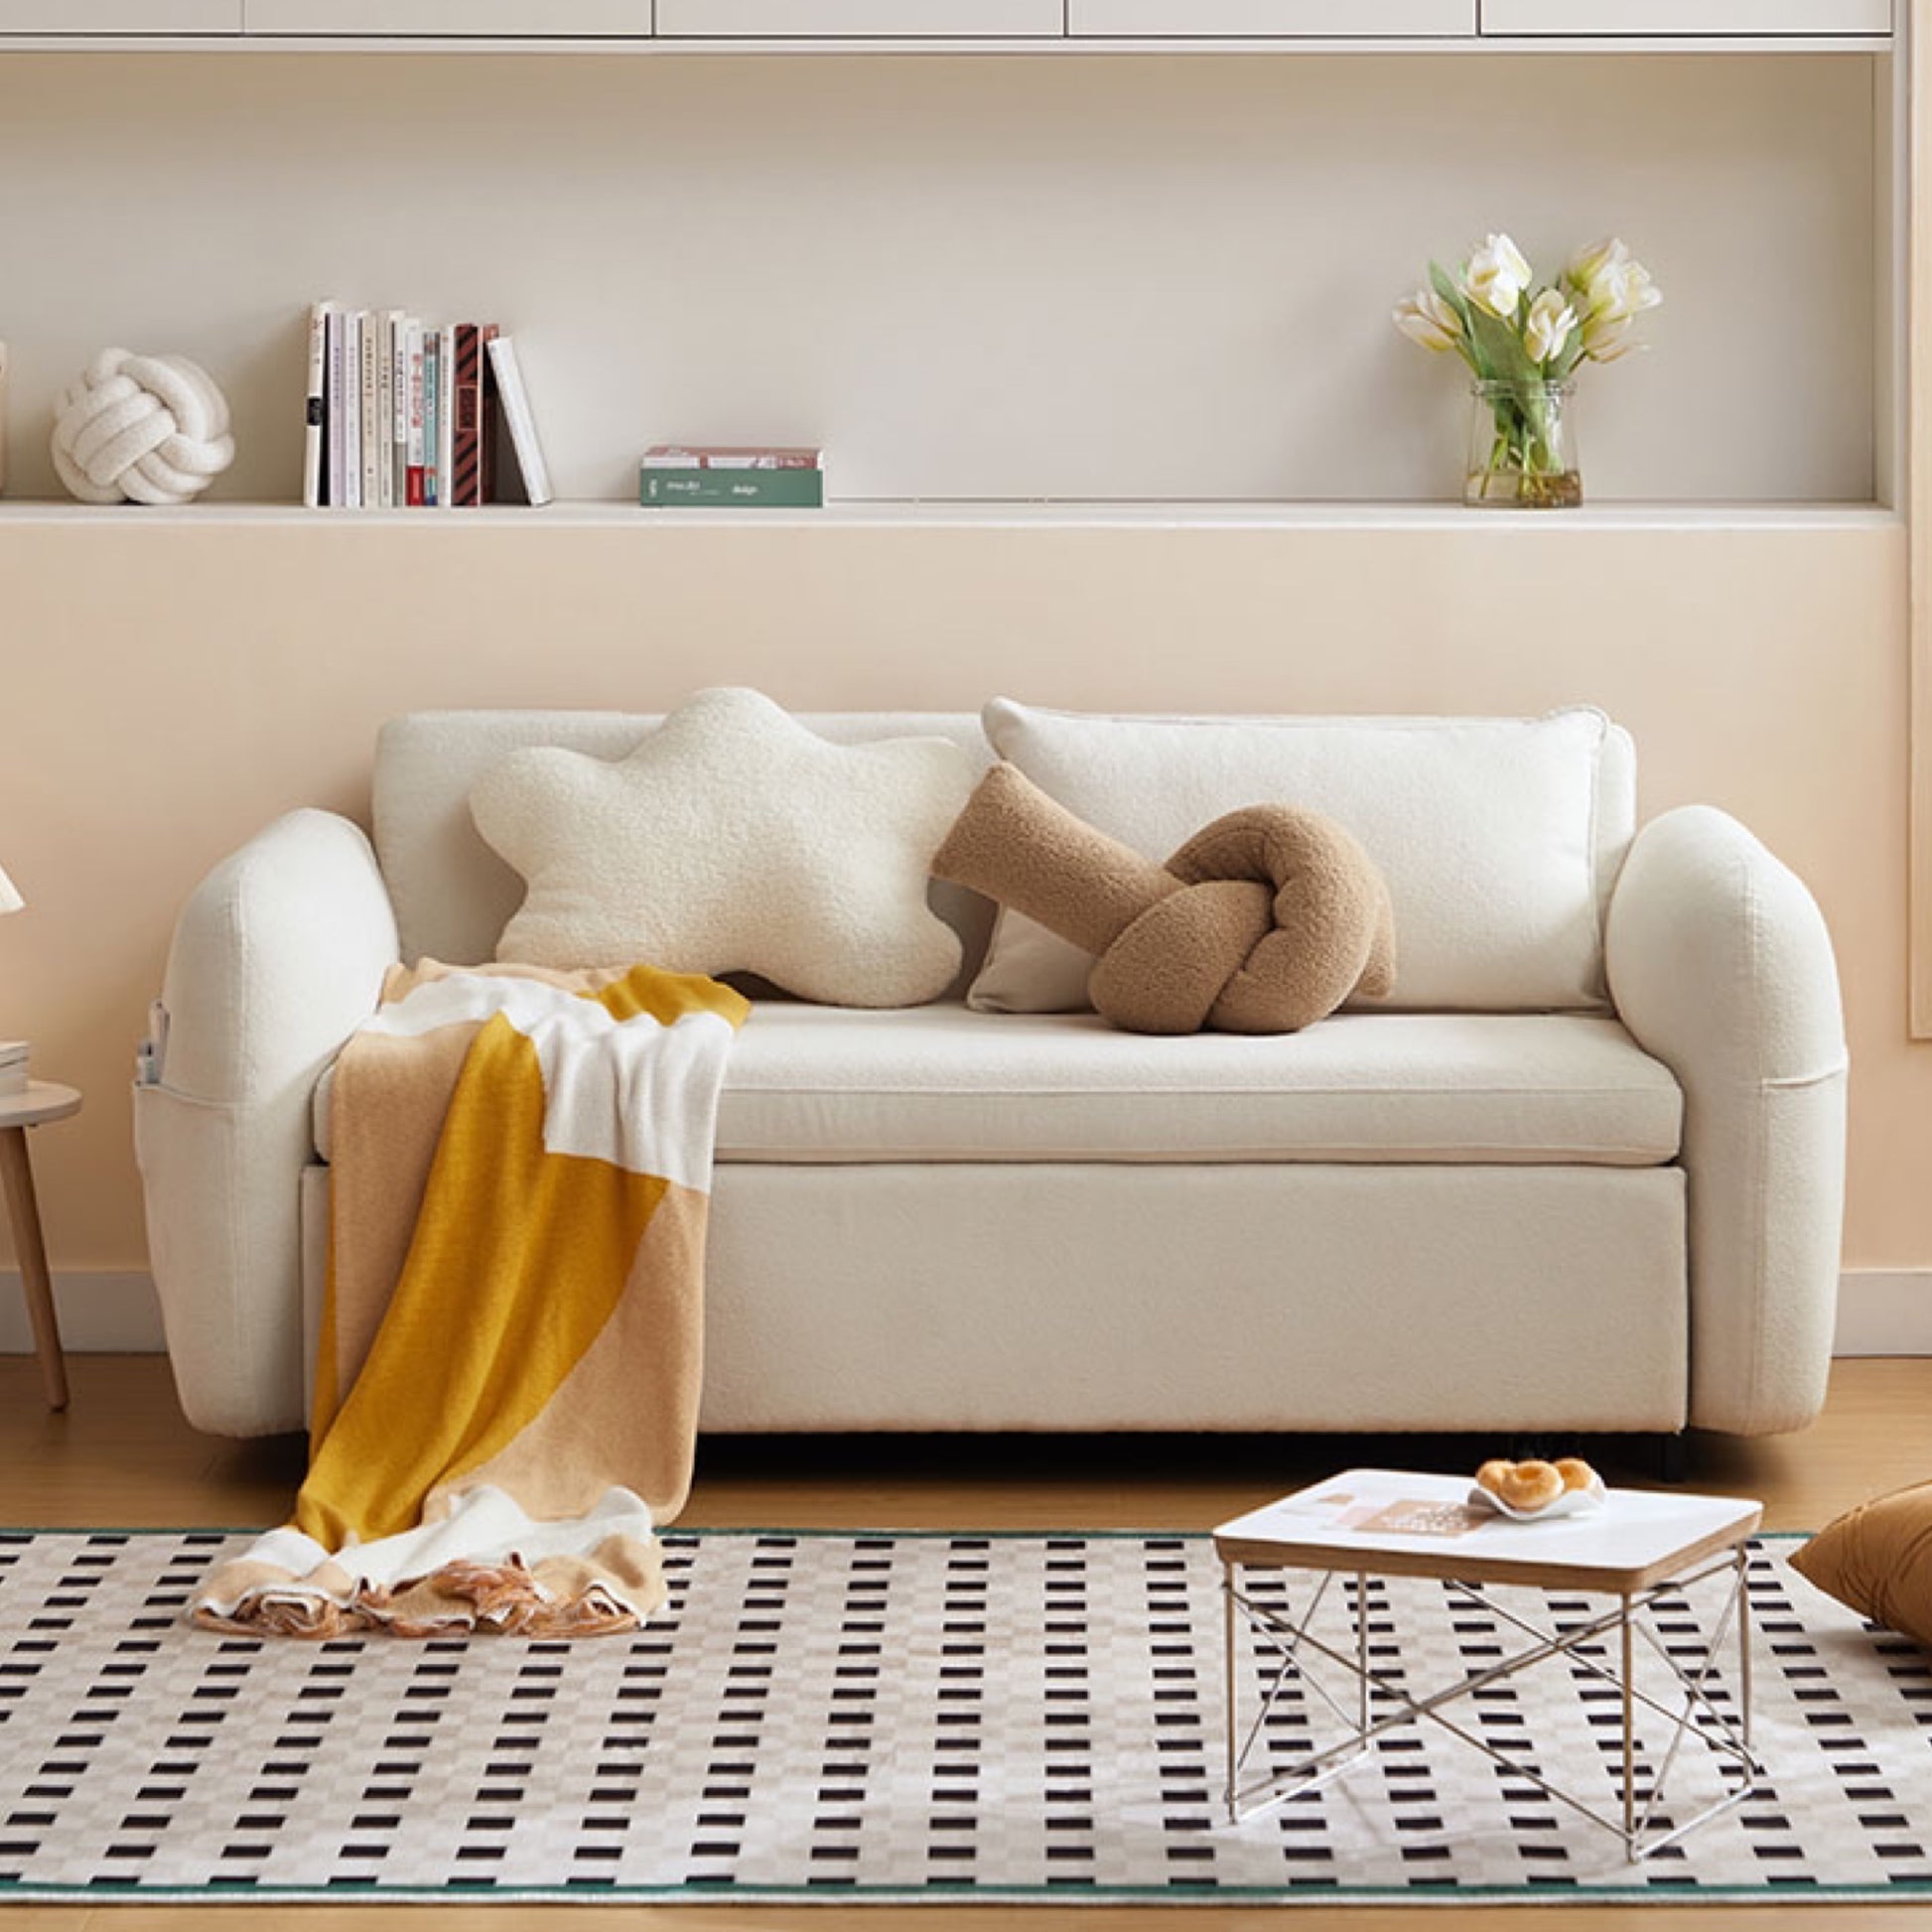 Furniture-sofa-sofa bed-comfort-cushions-pillow-cover-throw blankets-coffee tea